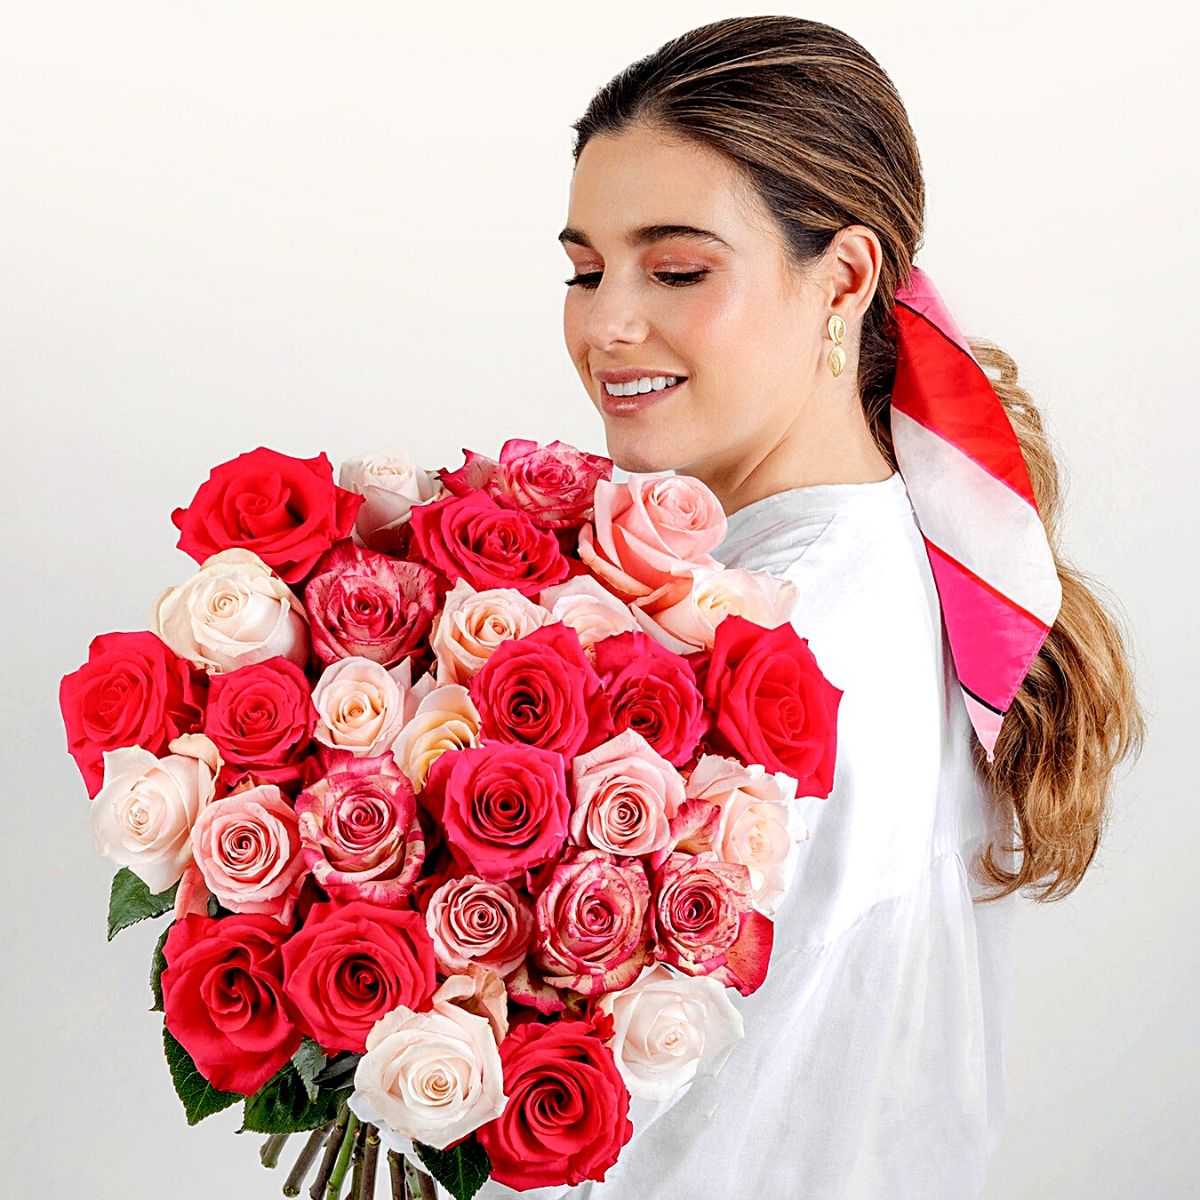 Ecuador’s Flower Industry Remains Upbeat This Valentine’s